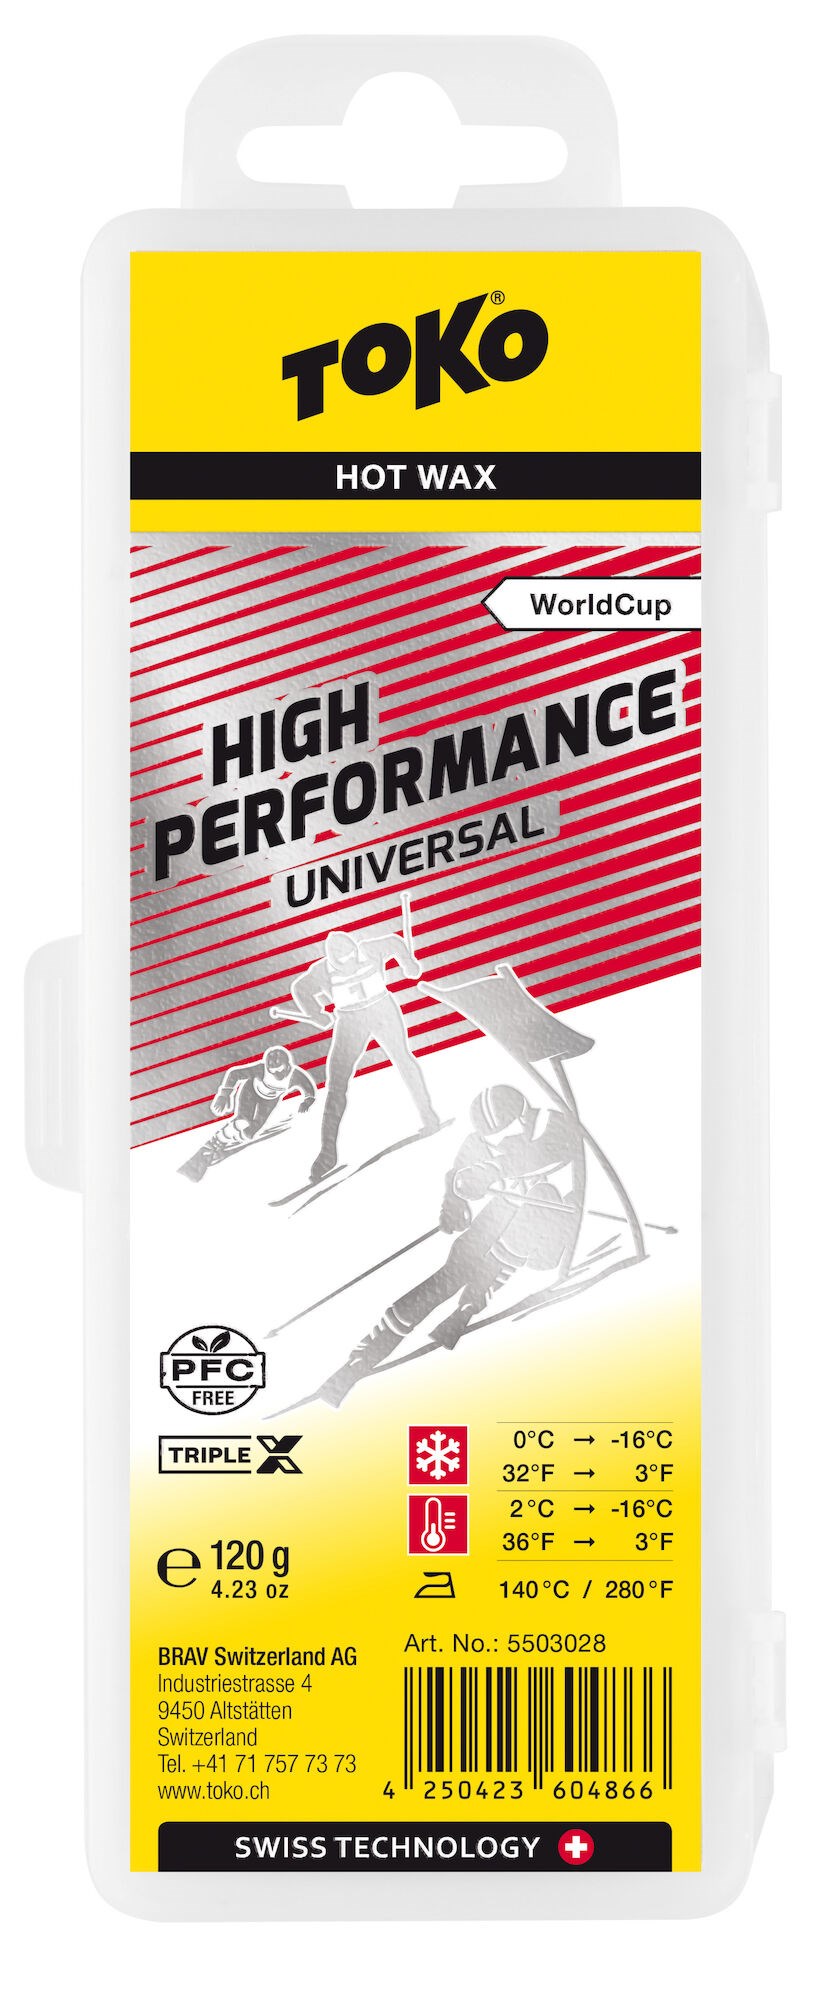 TOKO 	WC High Performance Universal 120g